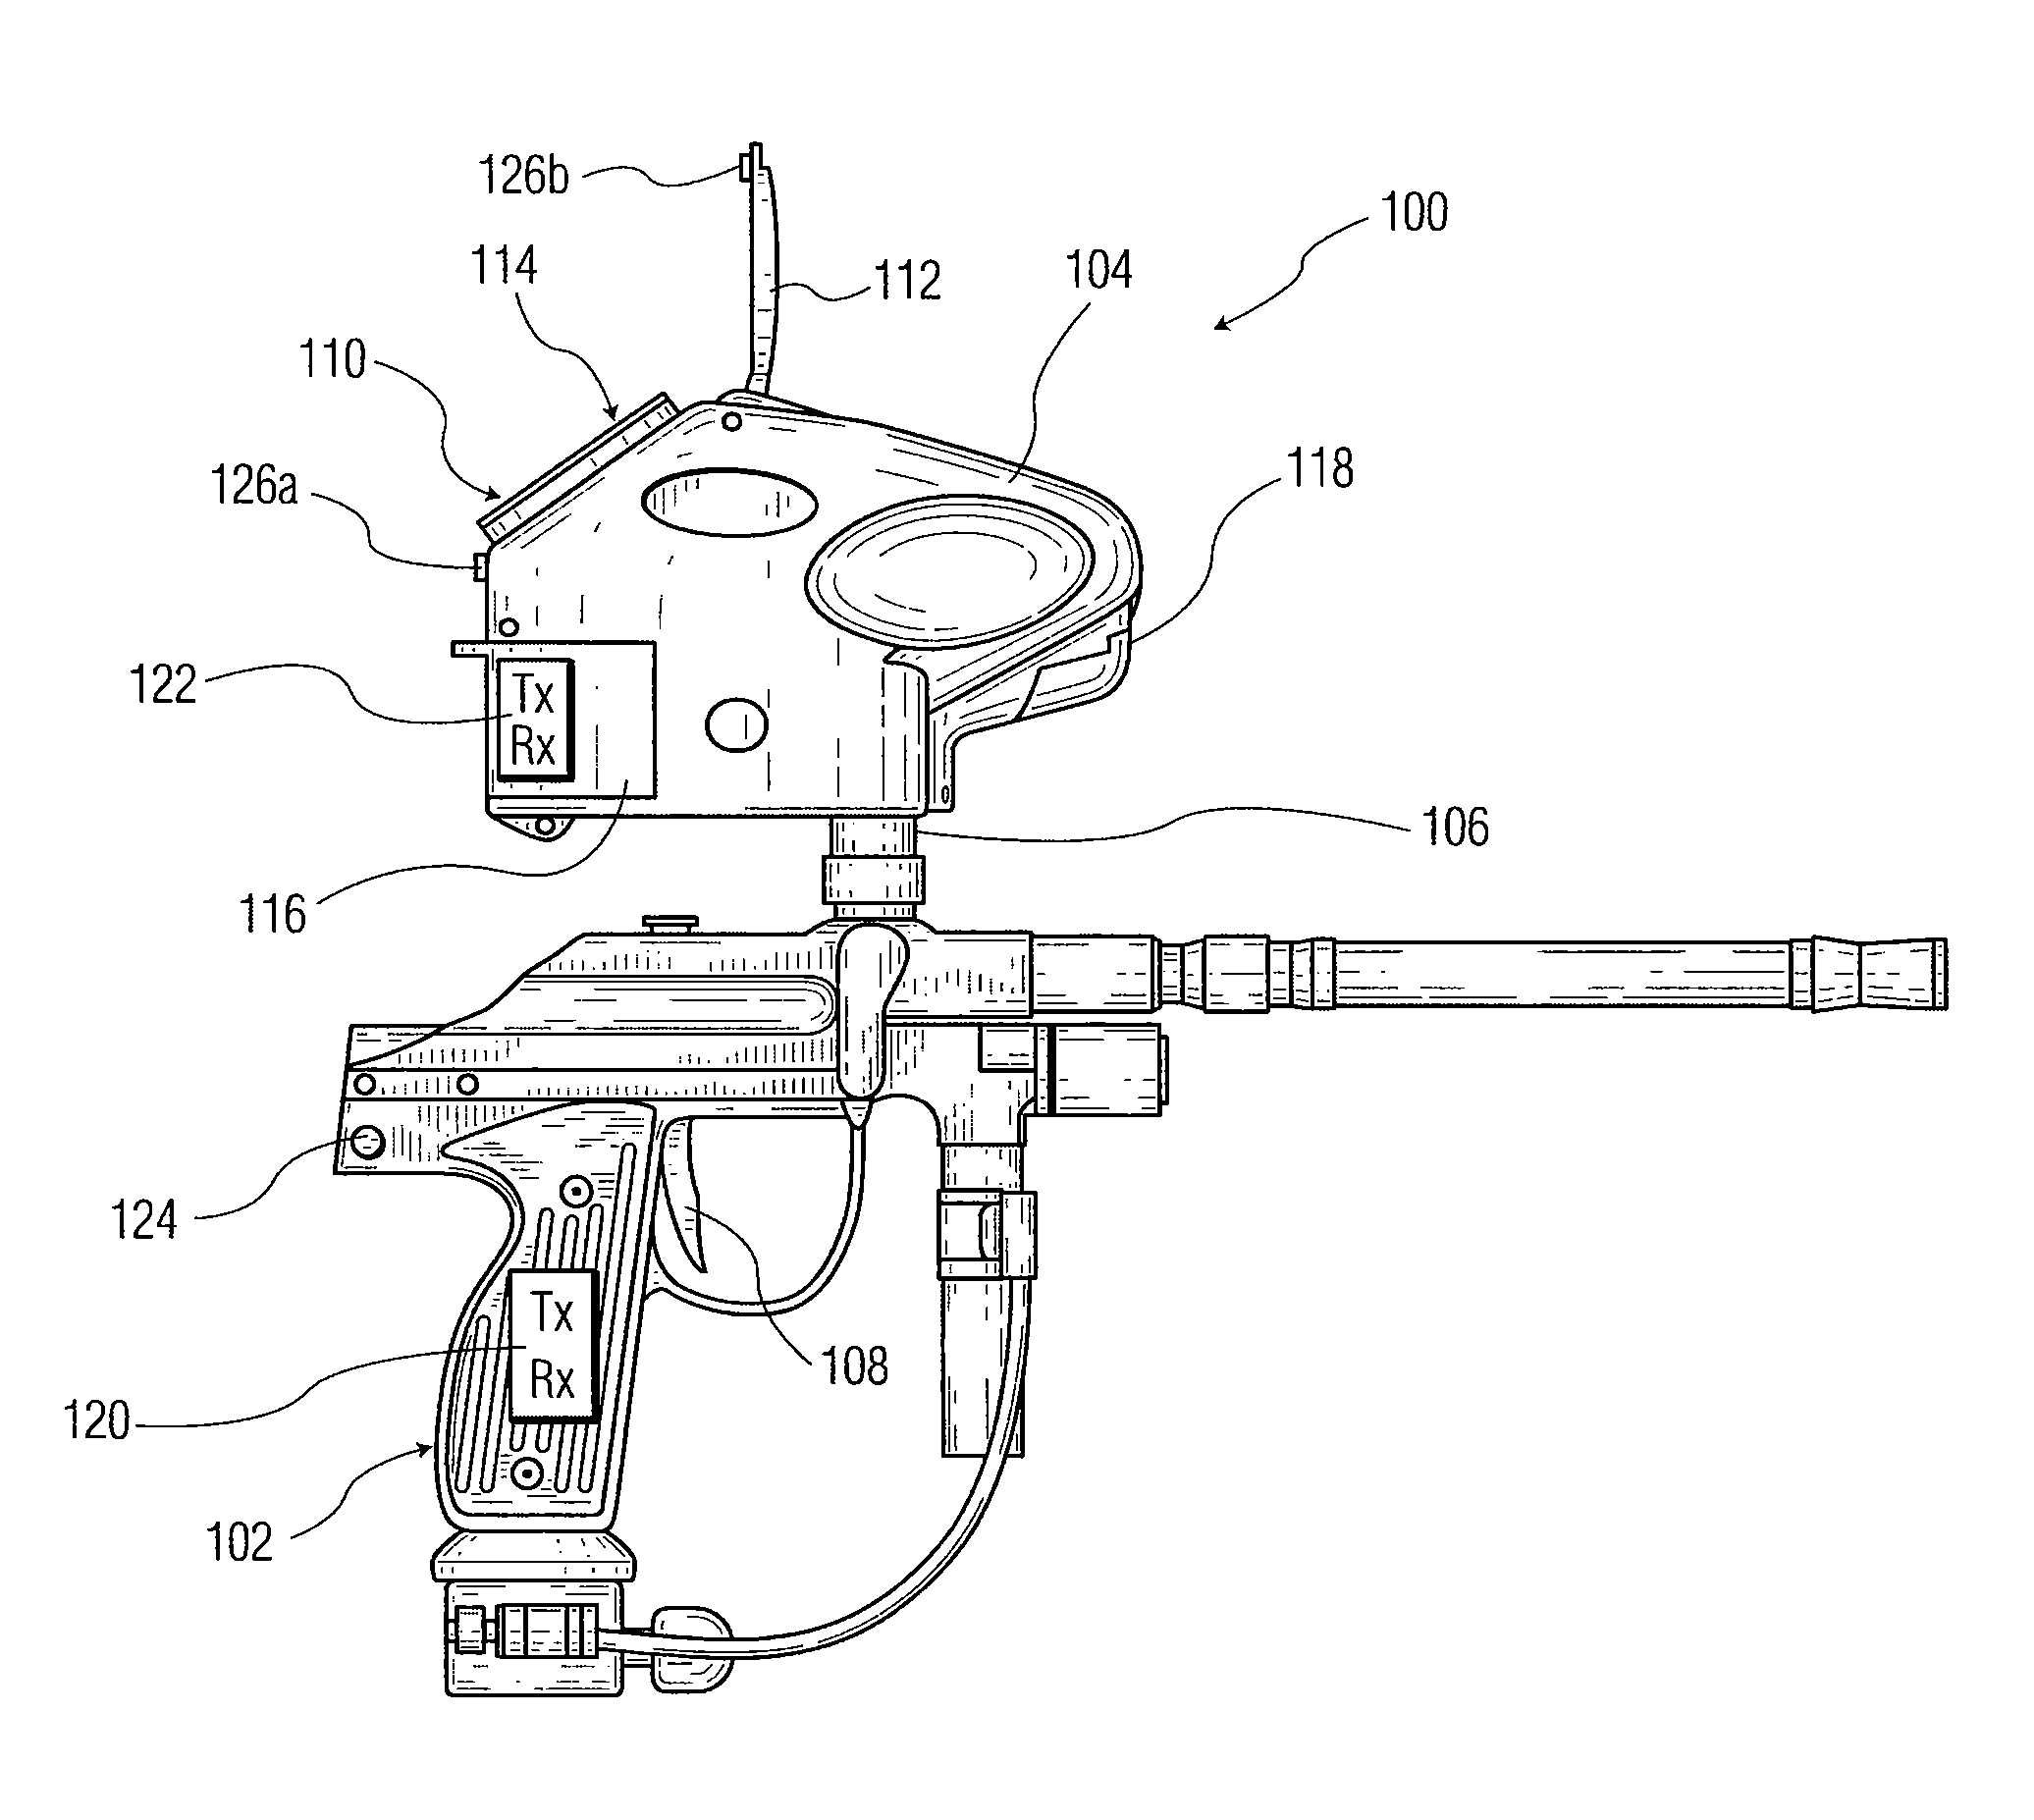 Paintball gun loading methods and apparatus